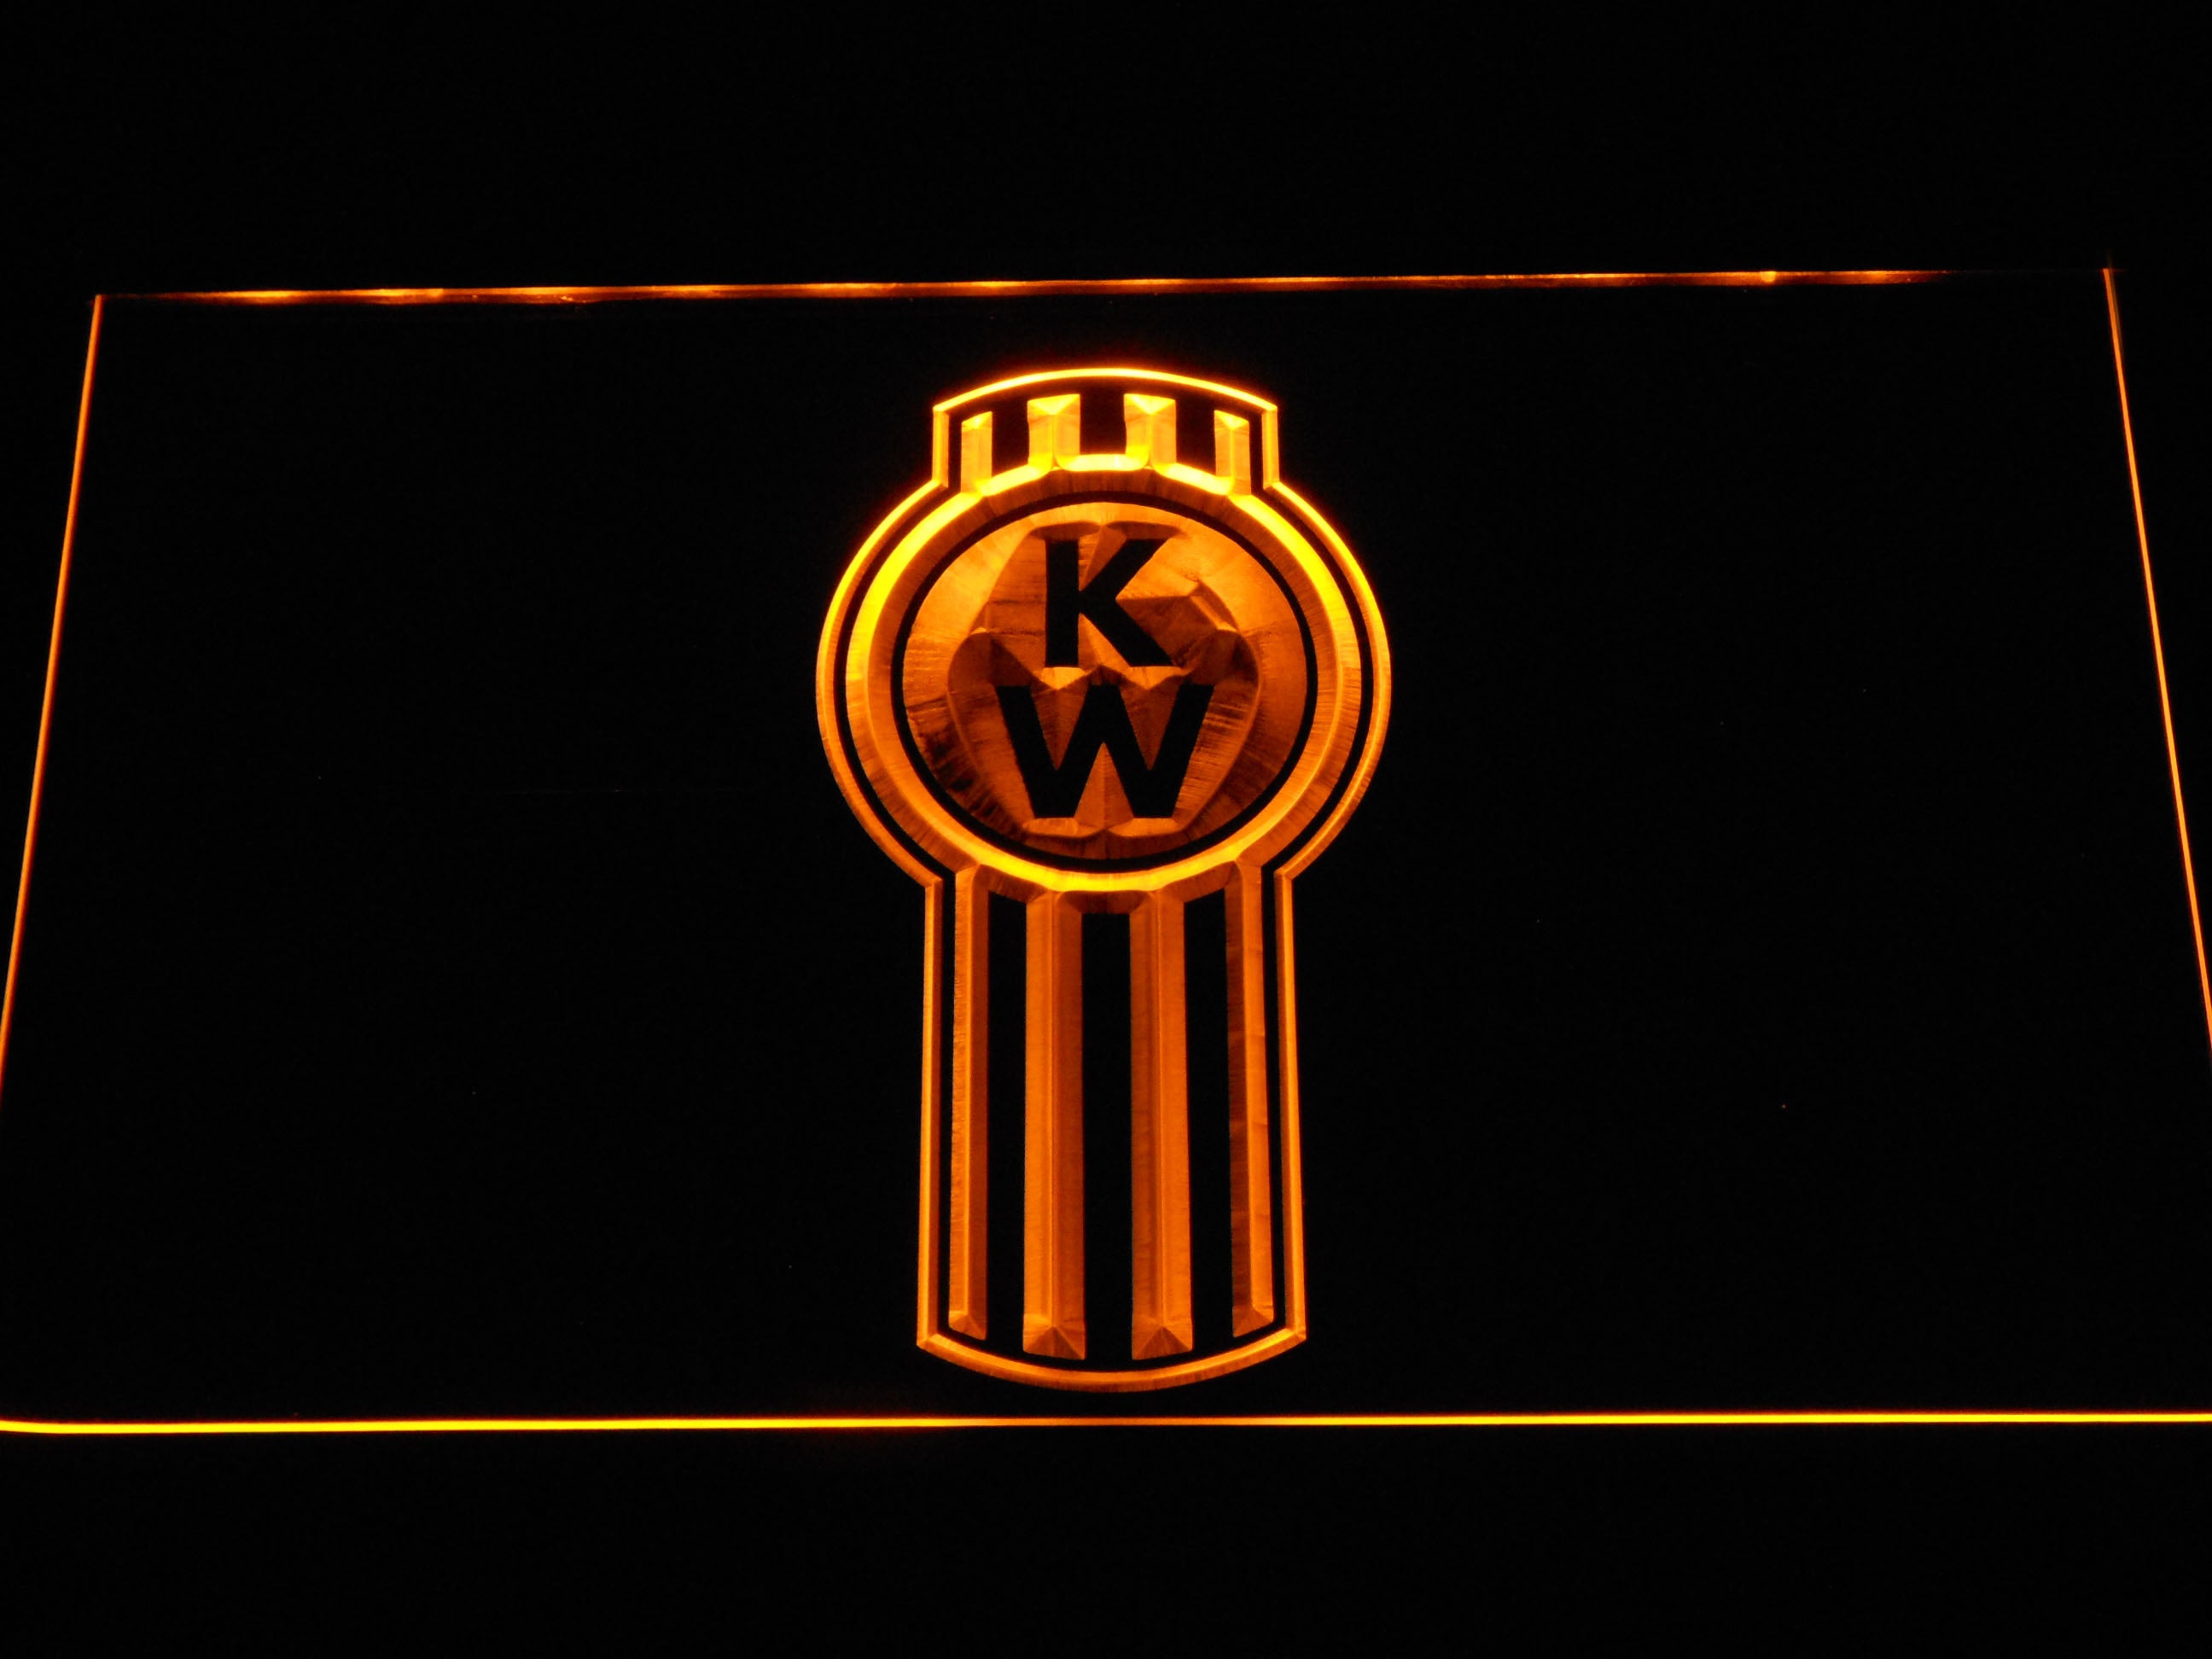 Kenworth Truck Neon Light LED Sign